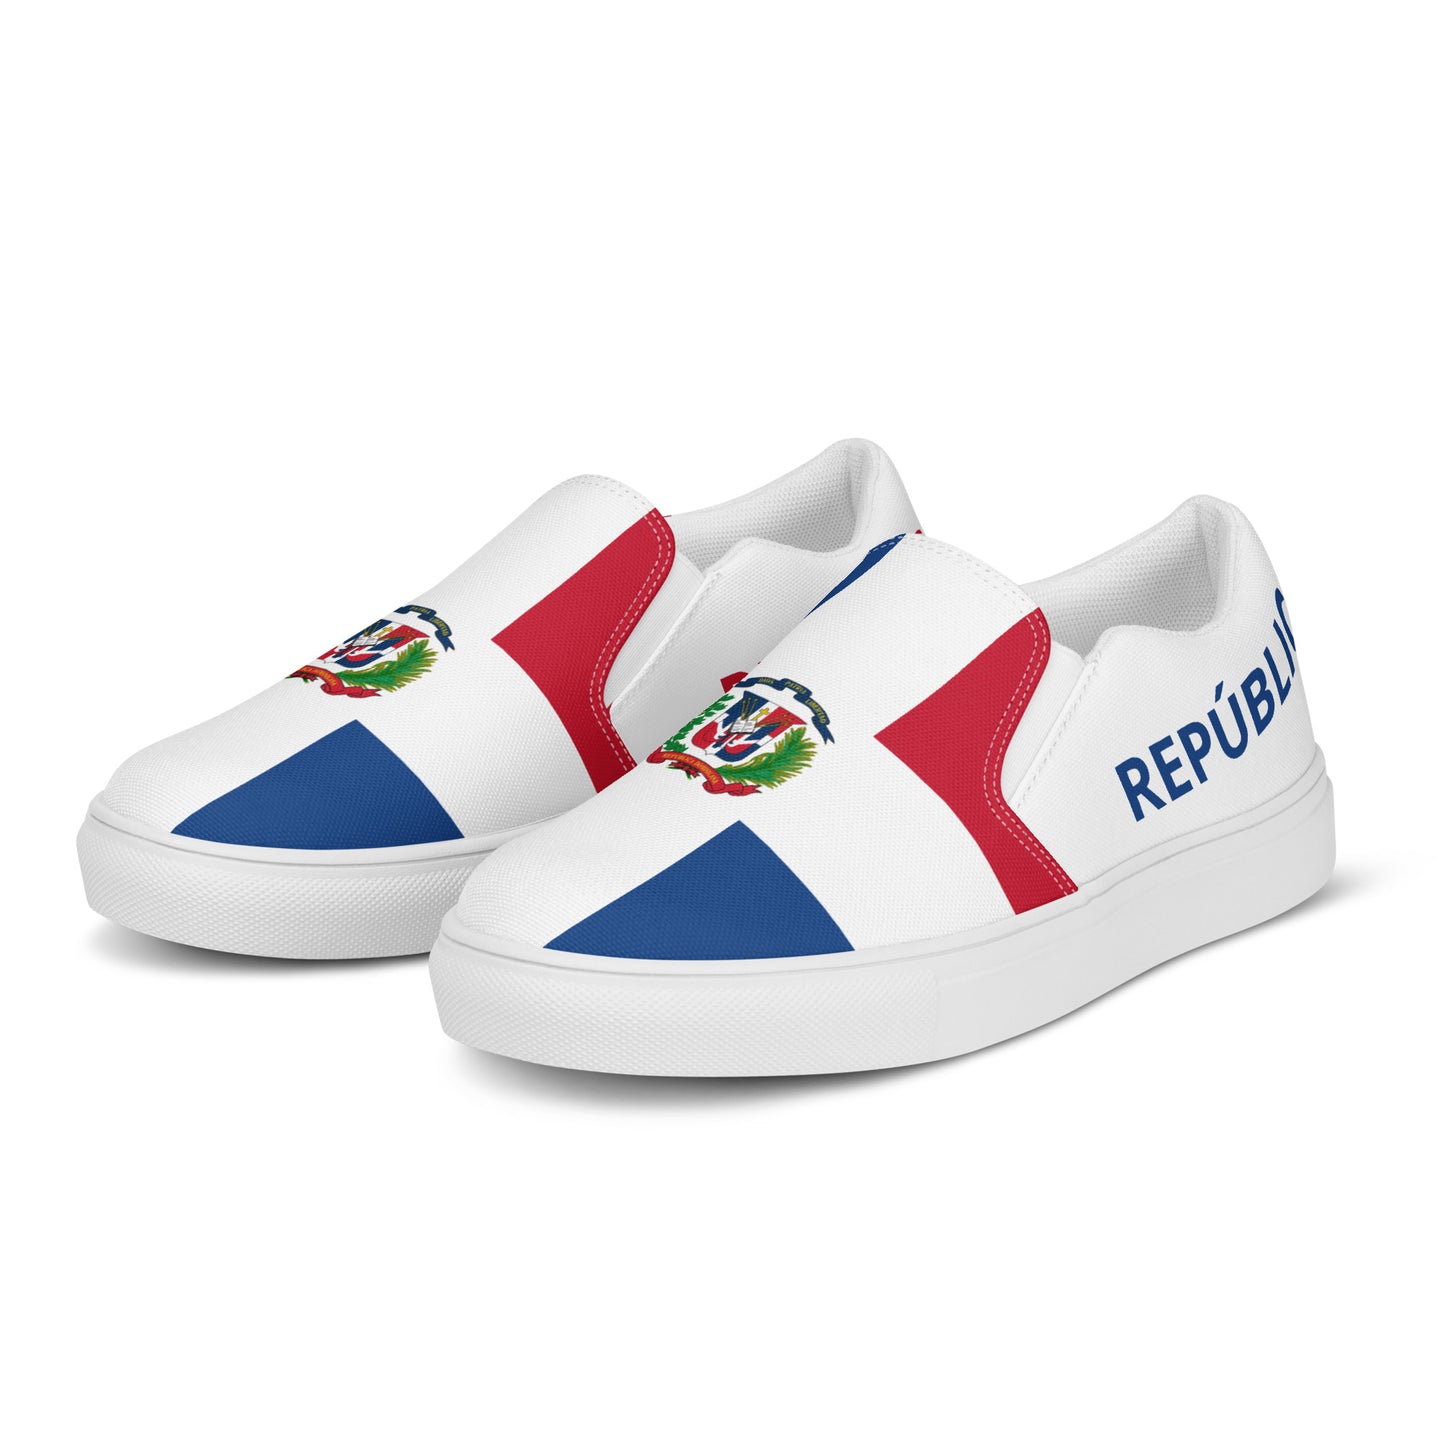 República Dominicana - Women - Bandera - Slip-on shoes